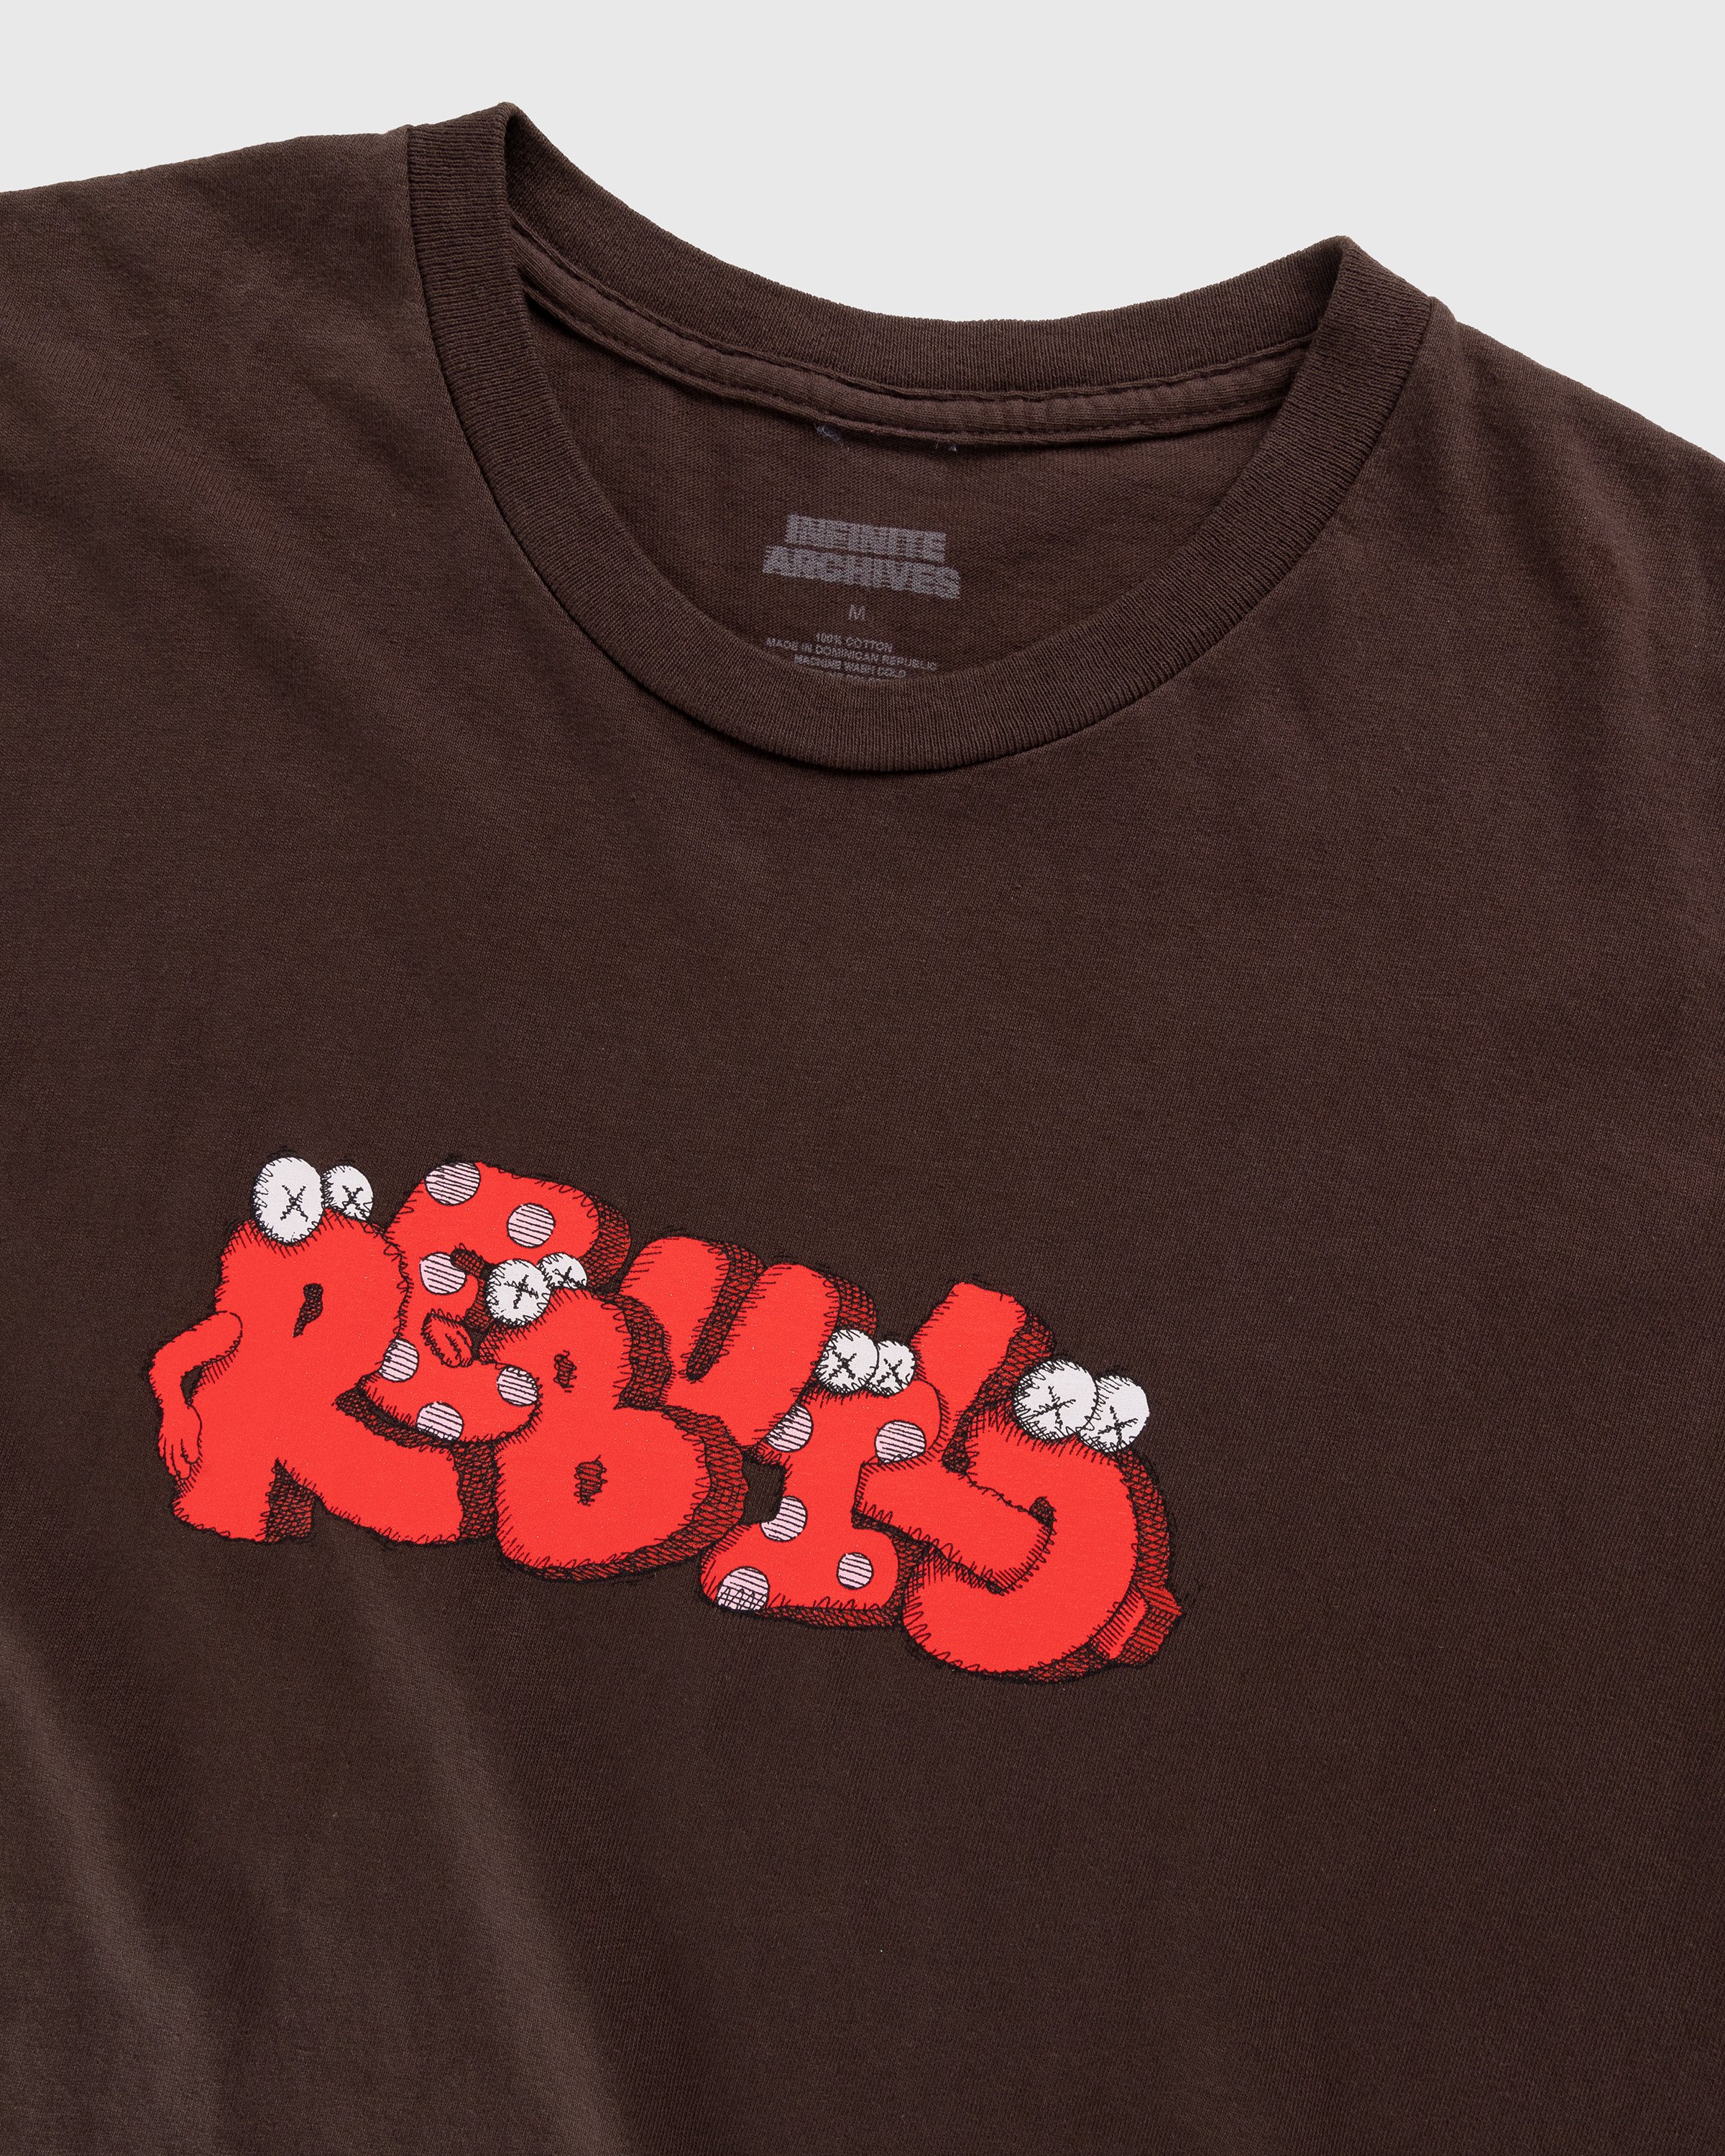 Infinite Archives x KAWS x Rebuild Foundation - Rebuild T-Shirt Brown - Clothing - Brown - Image 3